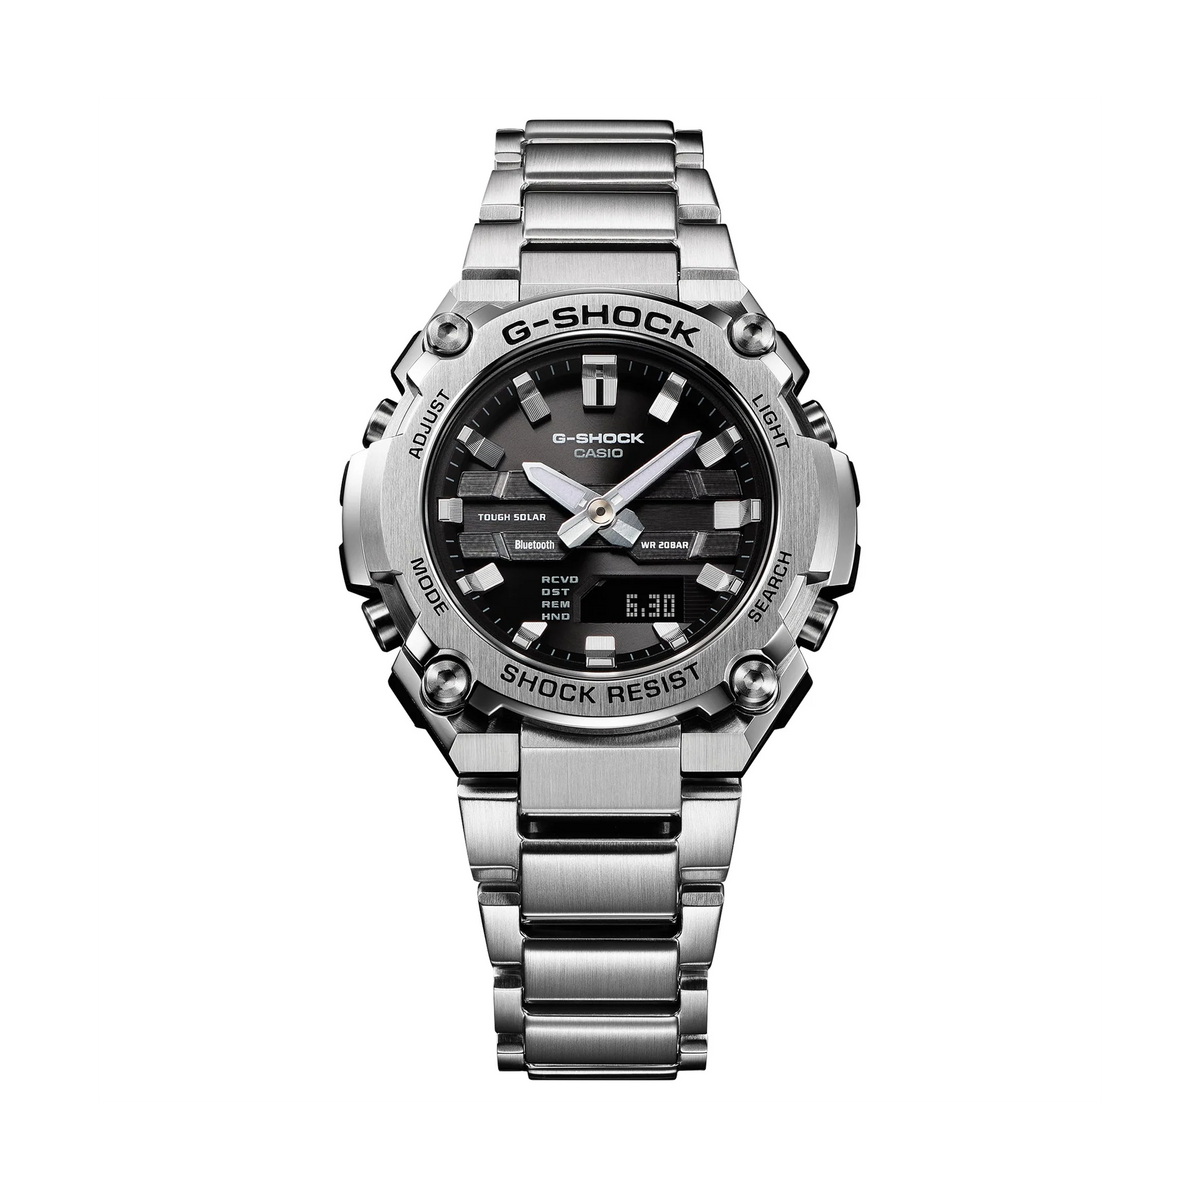 Casio G-SHOCK Men's Solar Watch GSTB600D-1A